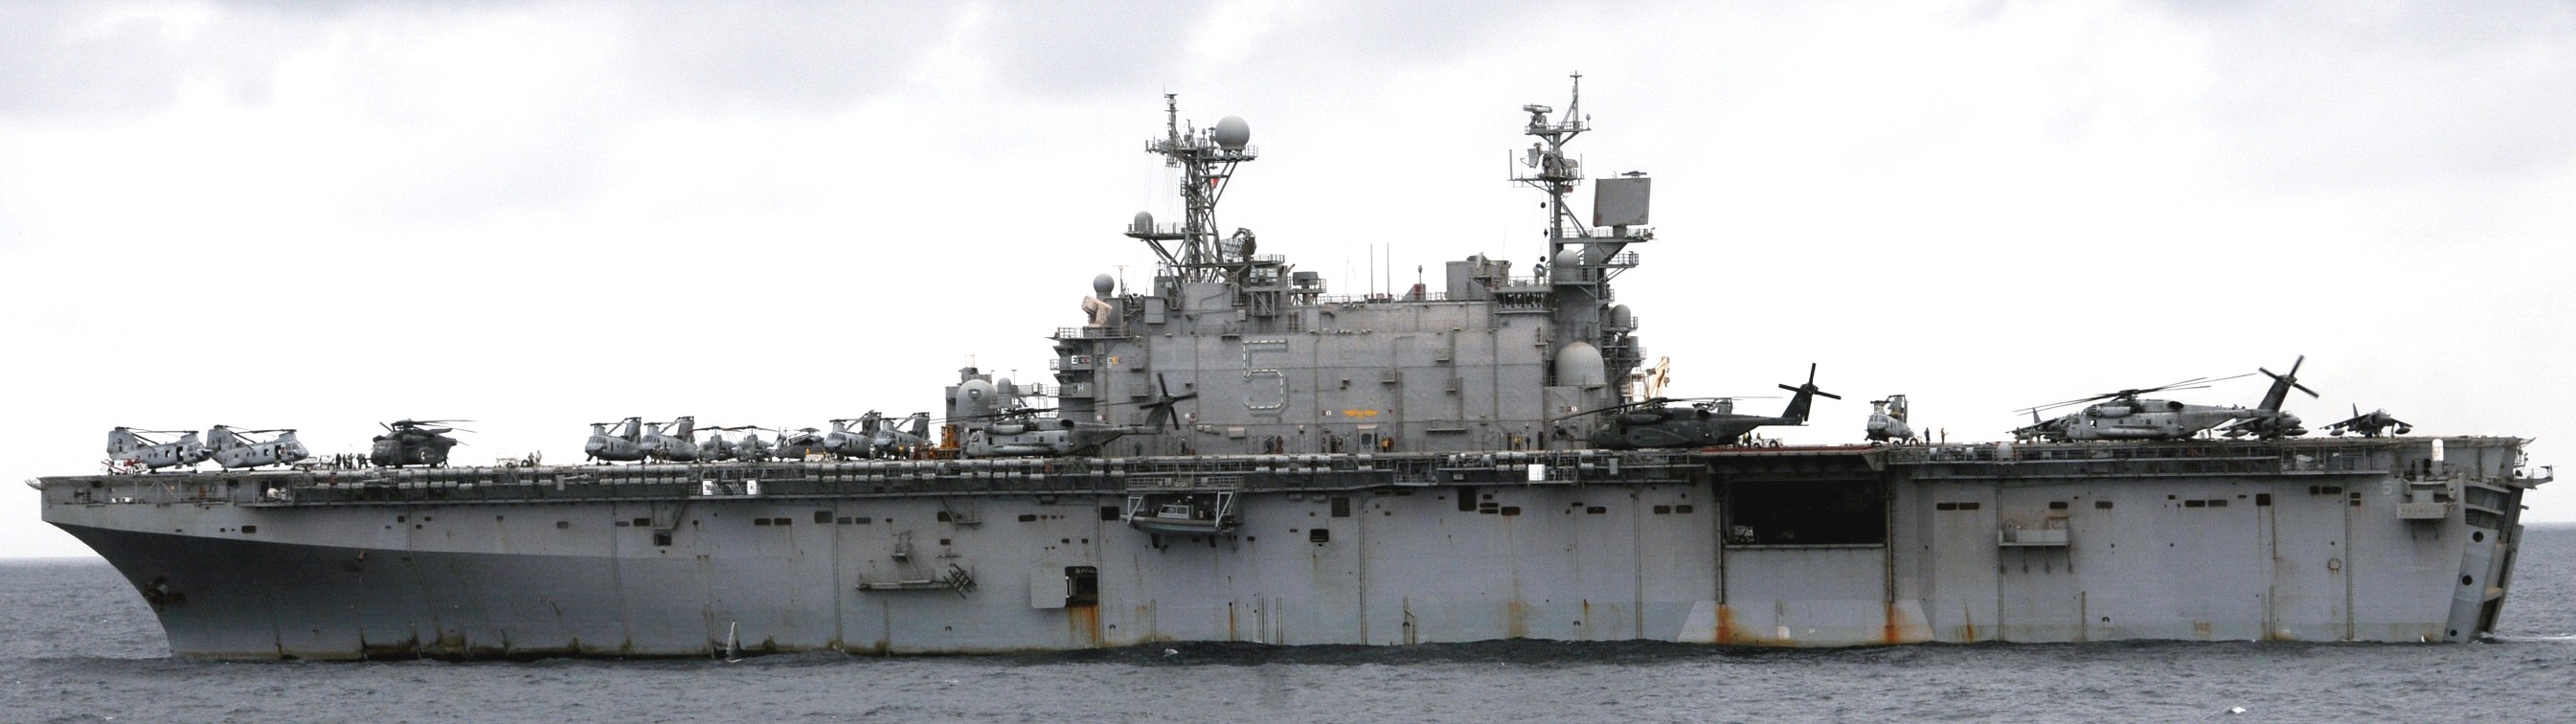 lha-5 uss peleliu tarawa class amphibious assault ship landing helicopter us navy hmm-165(rein) marines 59